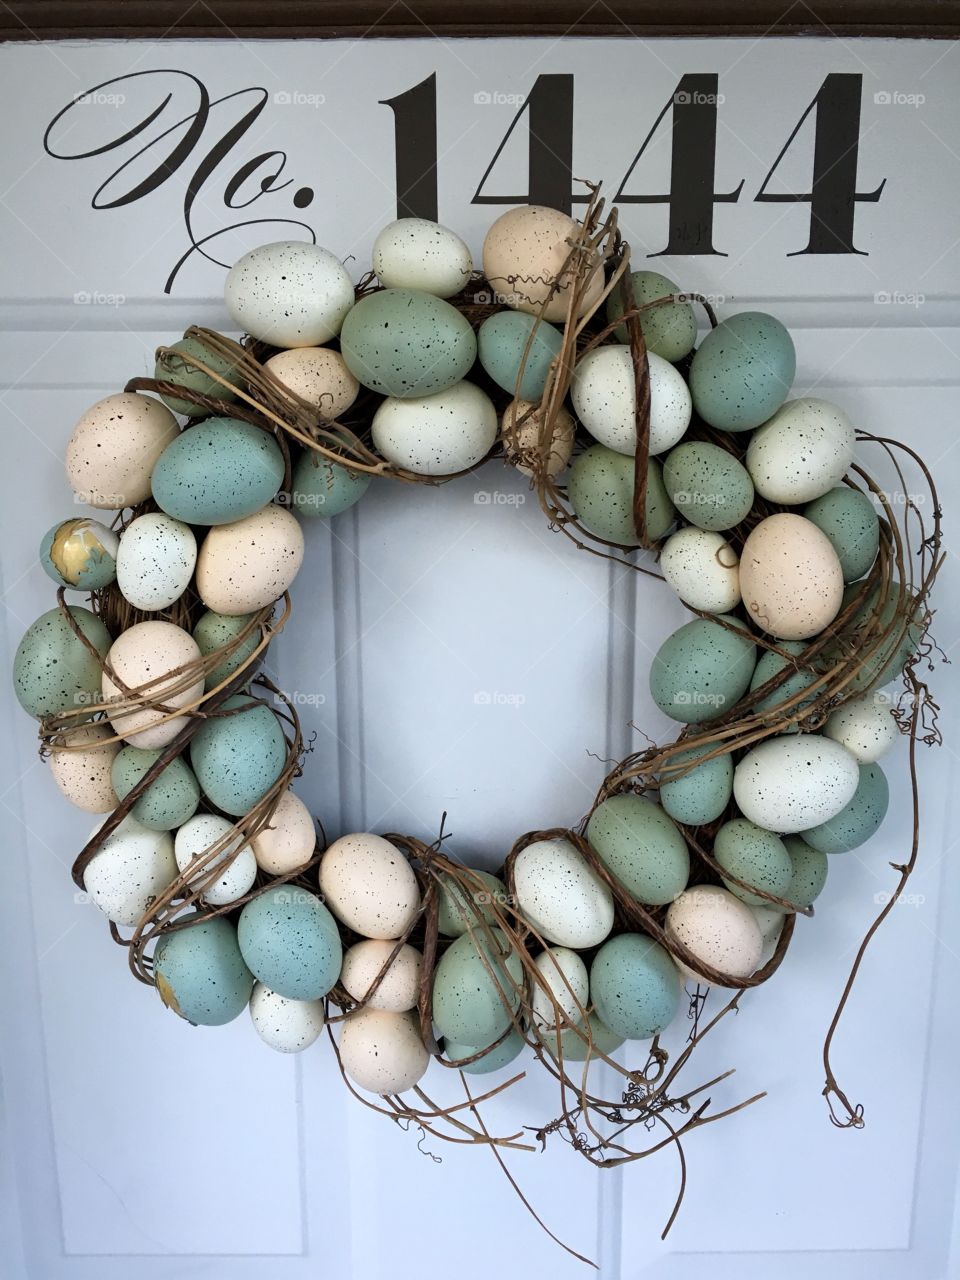 Egg wreath